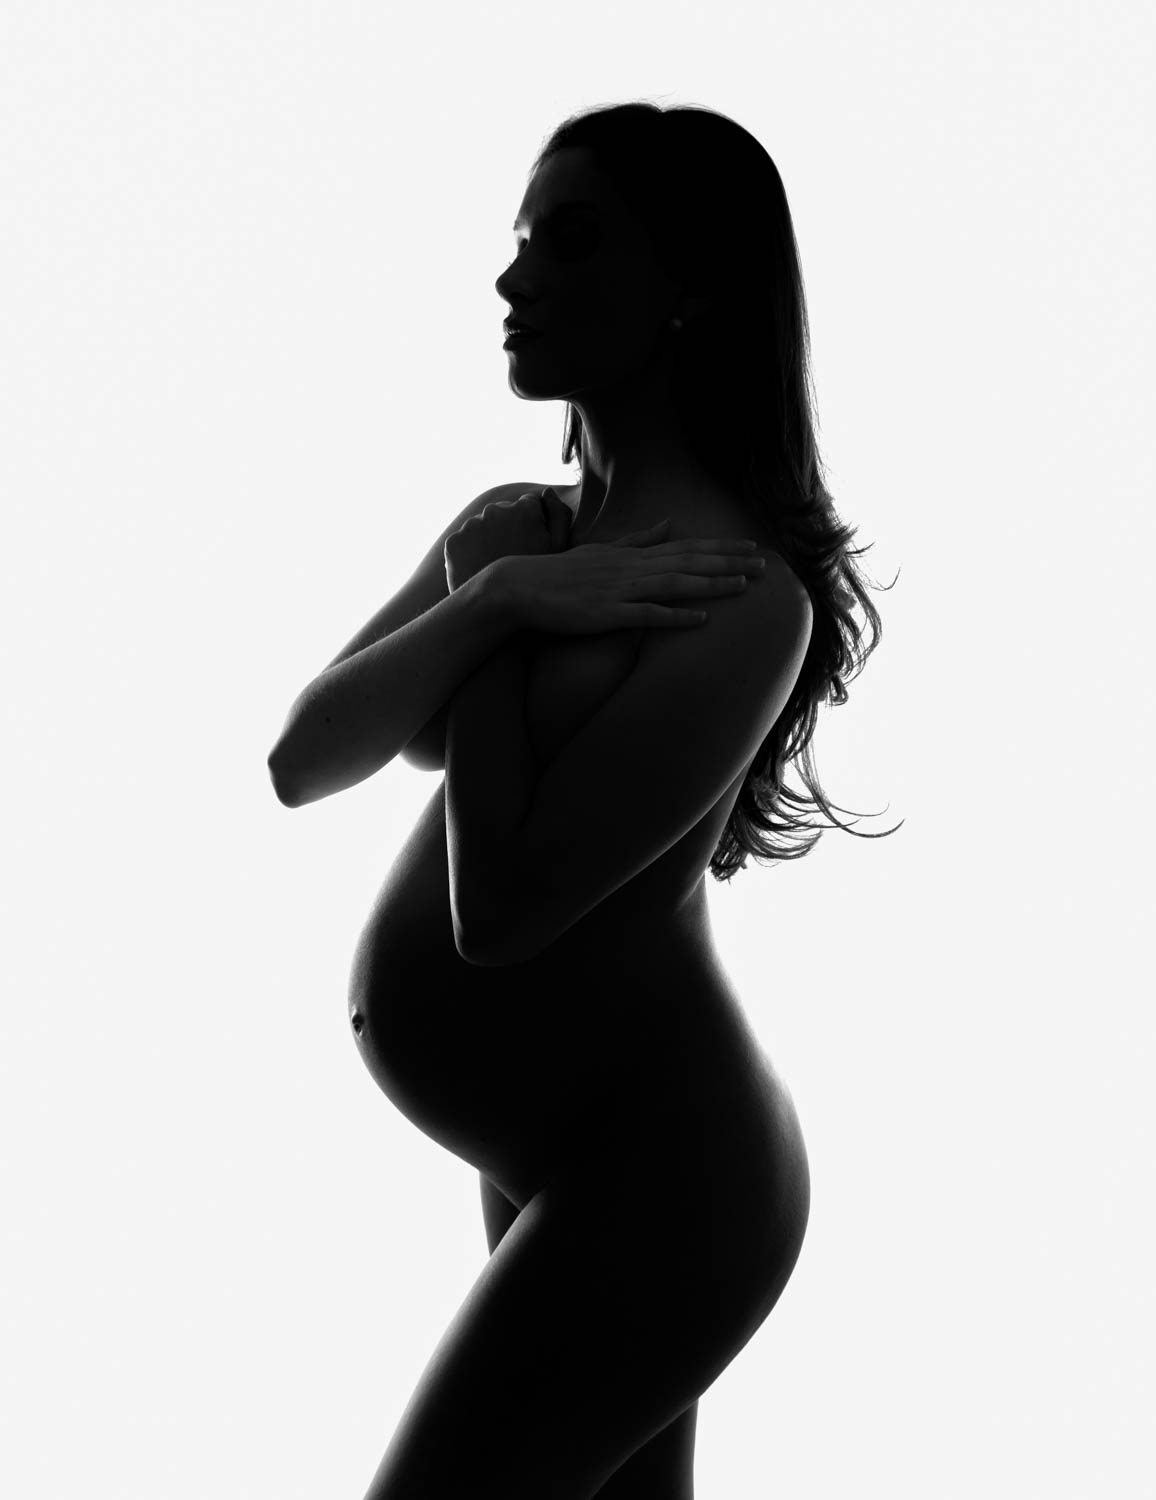 artistic nude maternity silhouette 